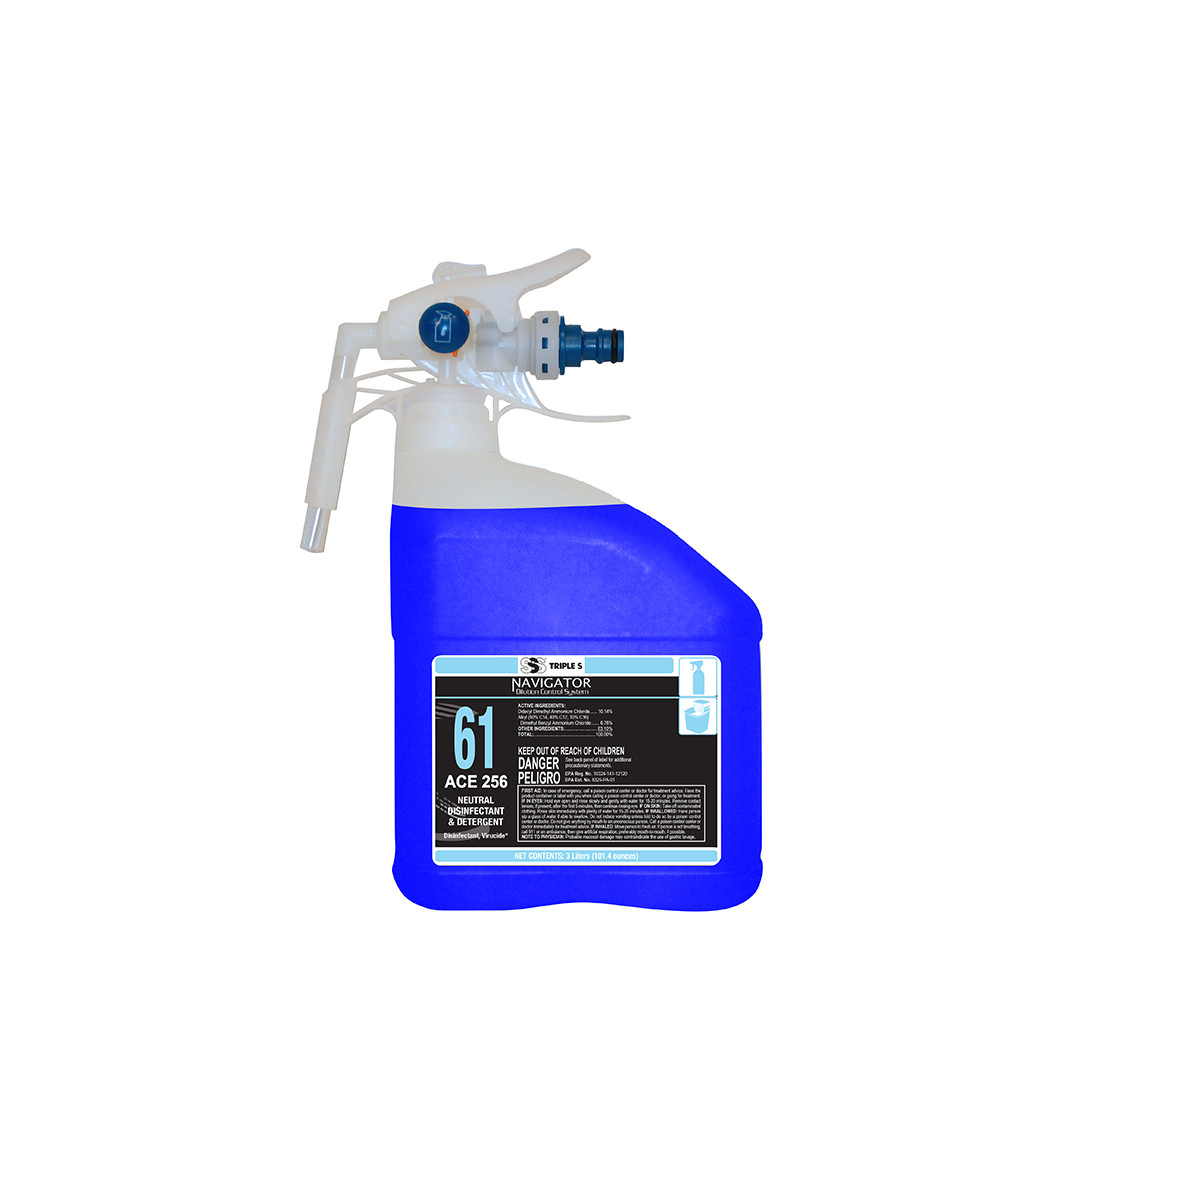 SSS Navigator PDC #61 ACE 256 
Neutral Disinfectant &amp; 
Detergent, 3L - (2/cs)